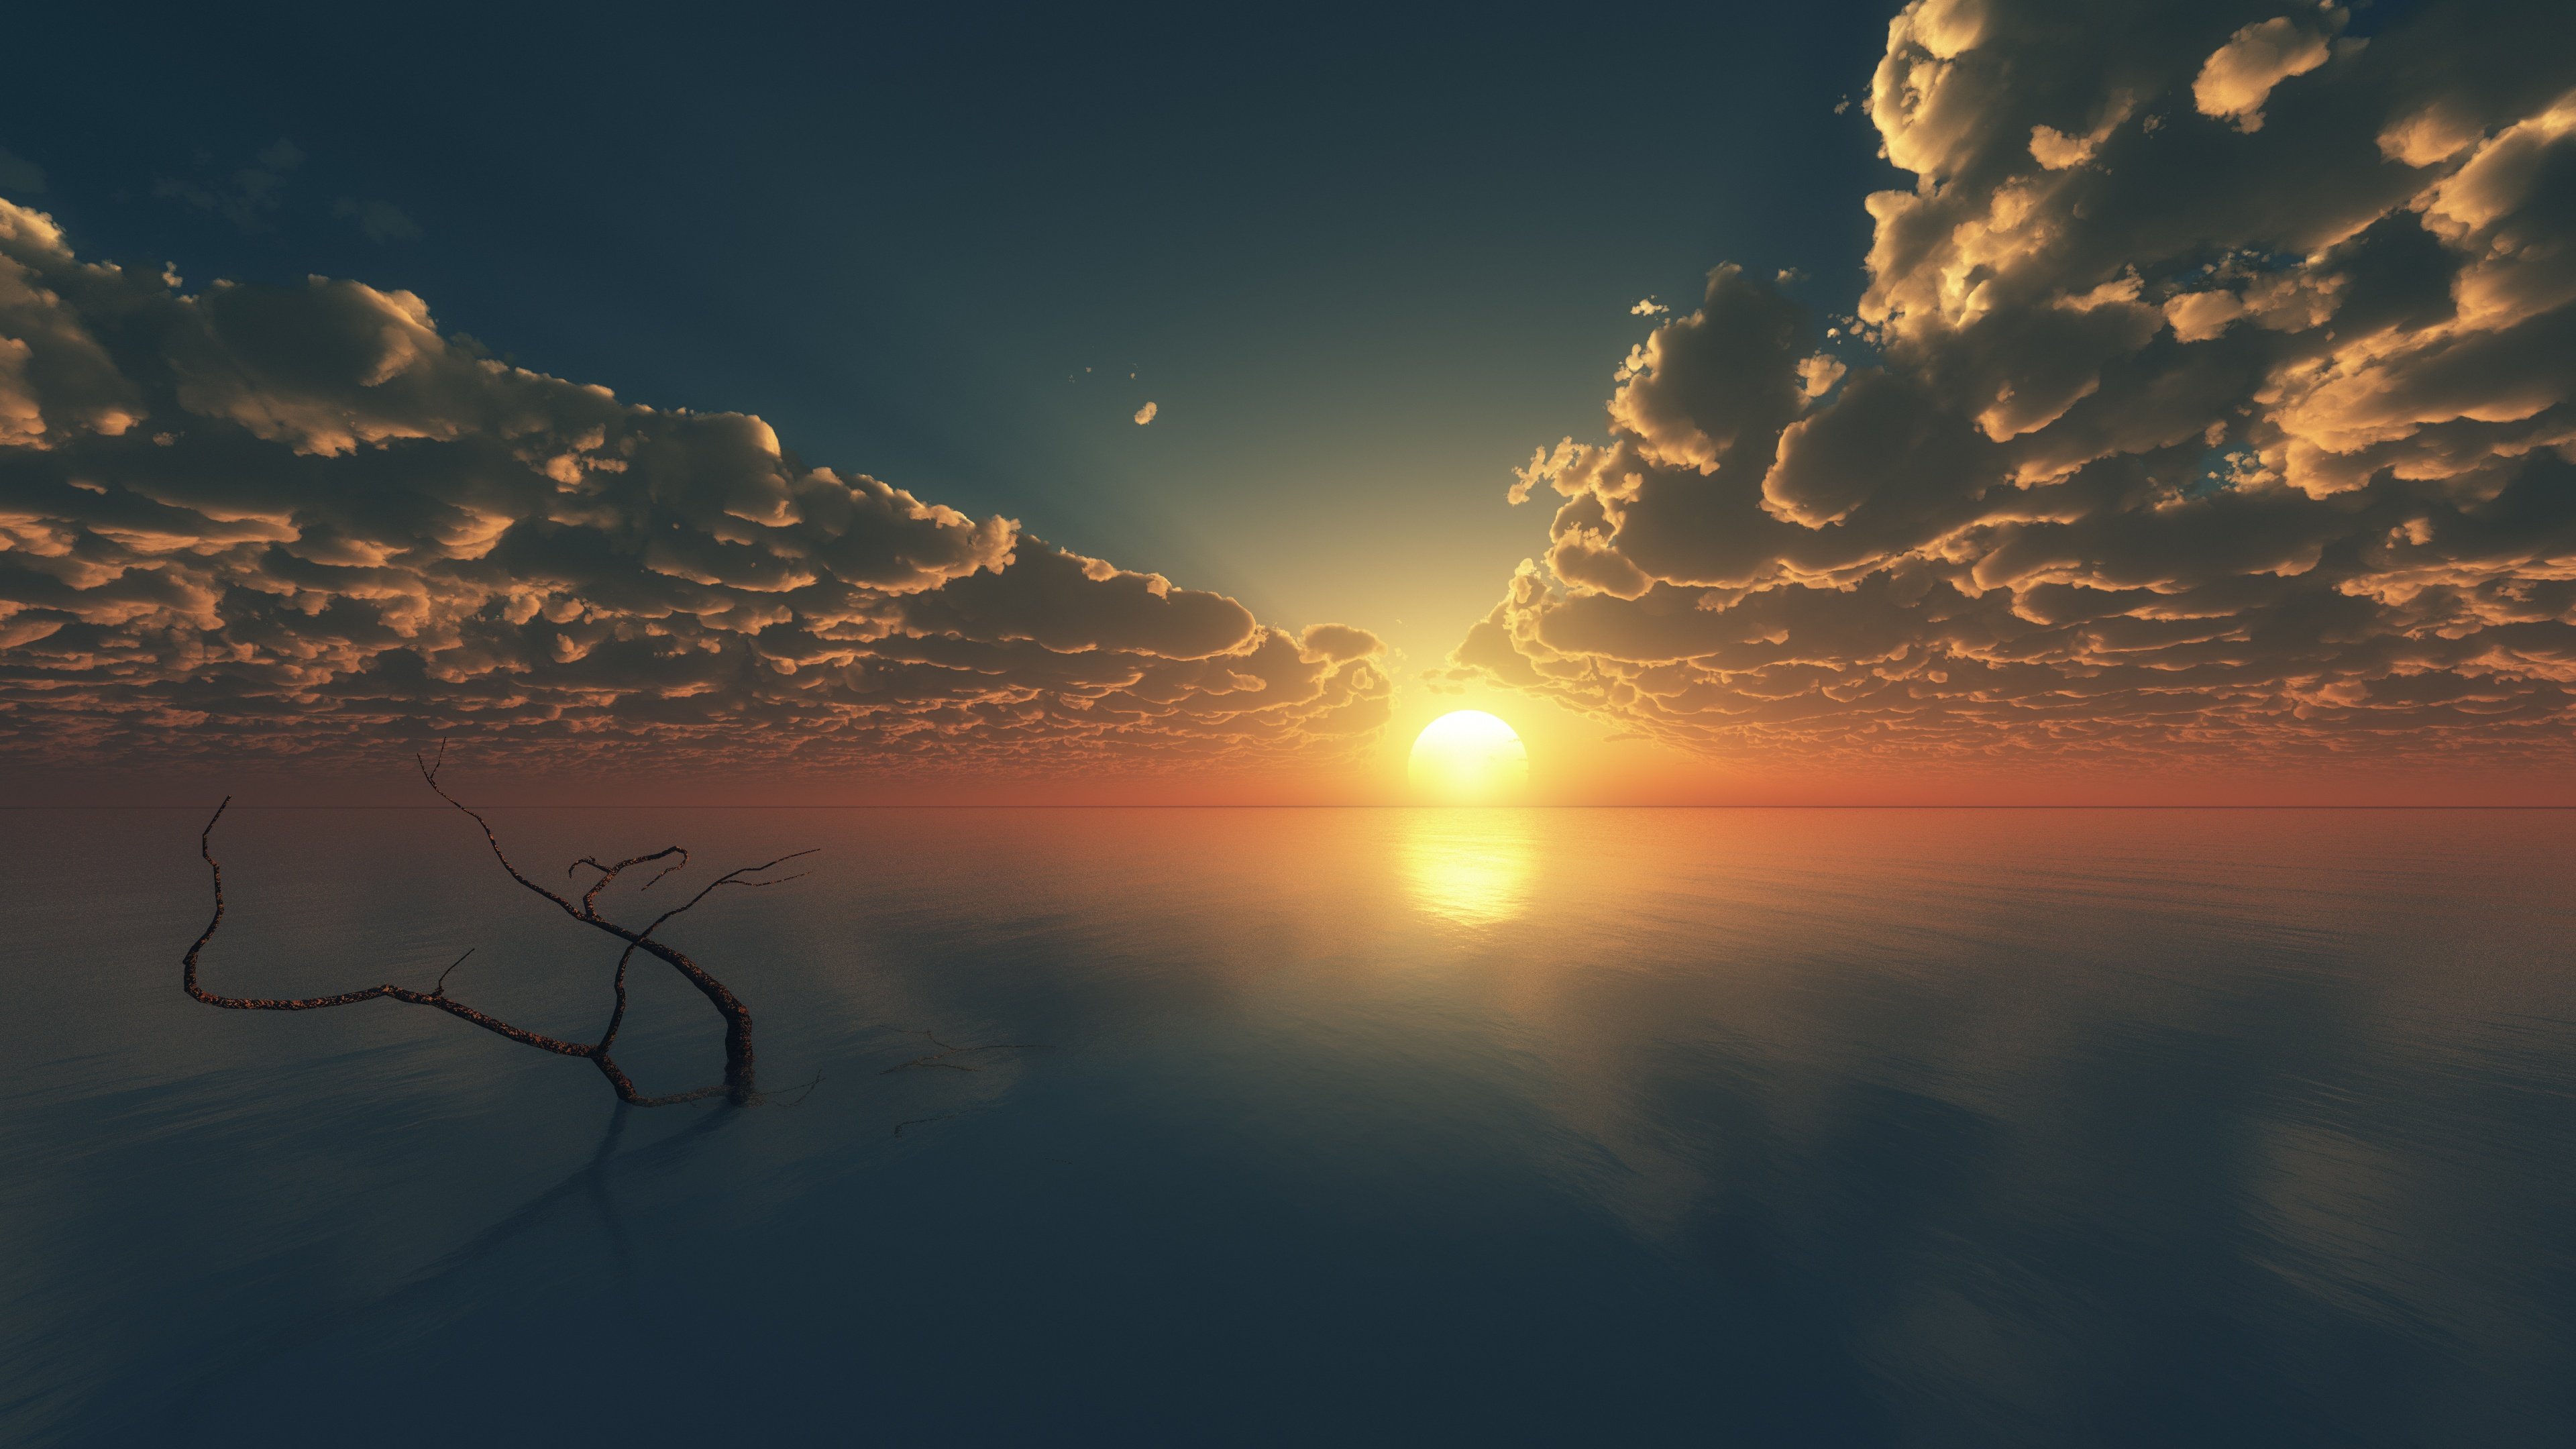 Sunset Reflections Digital Wallpaper in jpg format for free